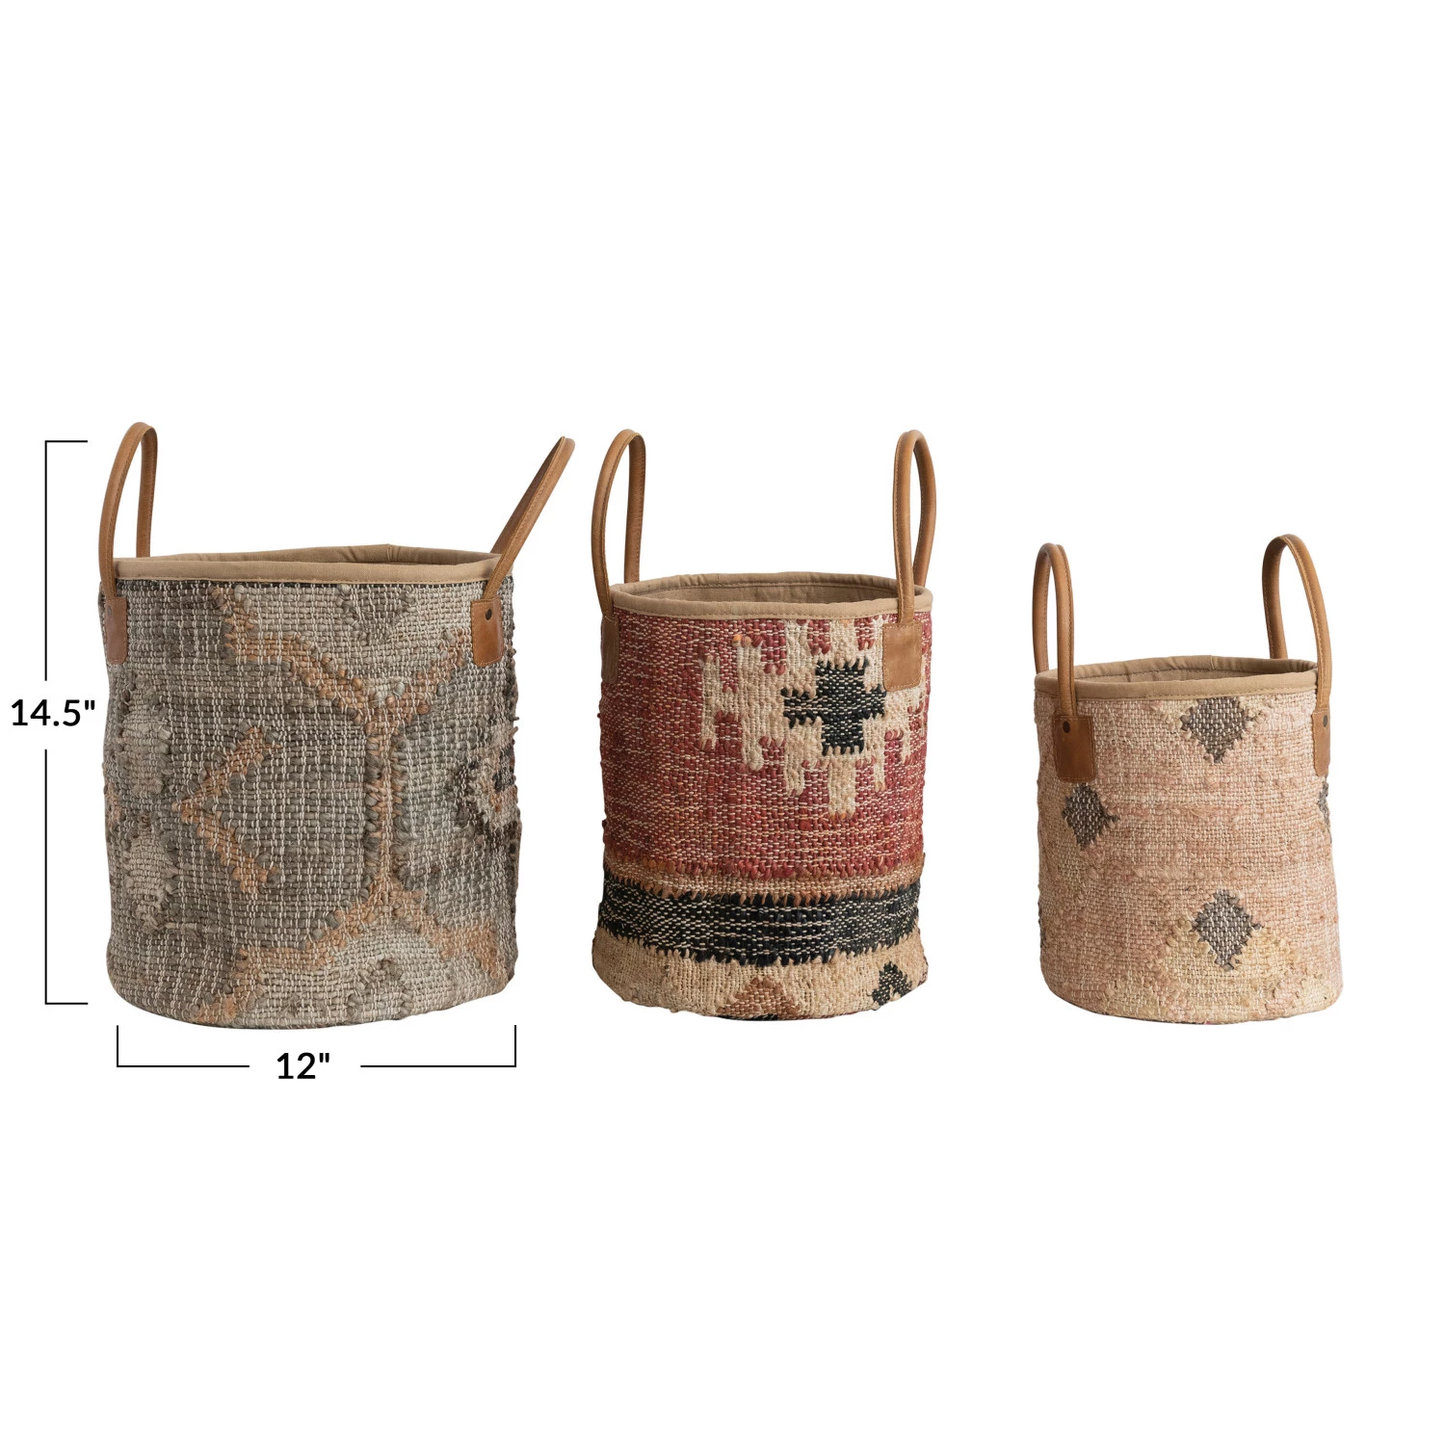 Jute & Cotton Kilim Baskets with Leather Handles